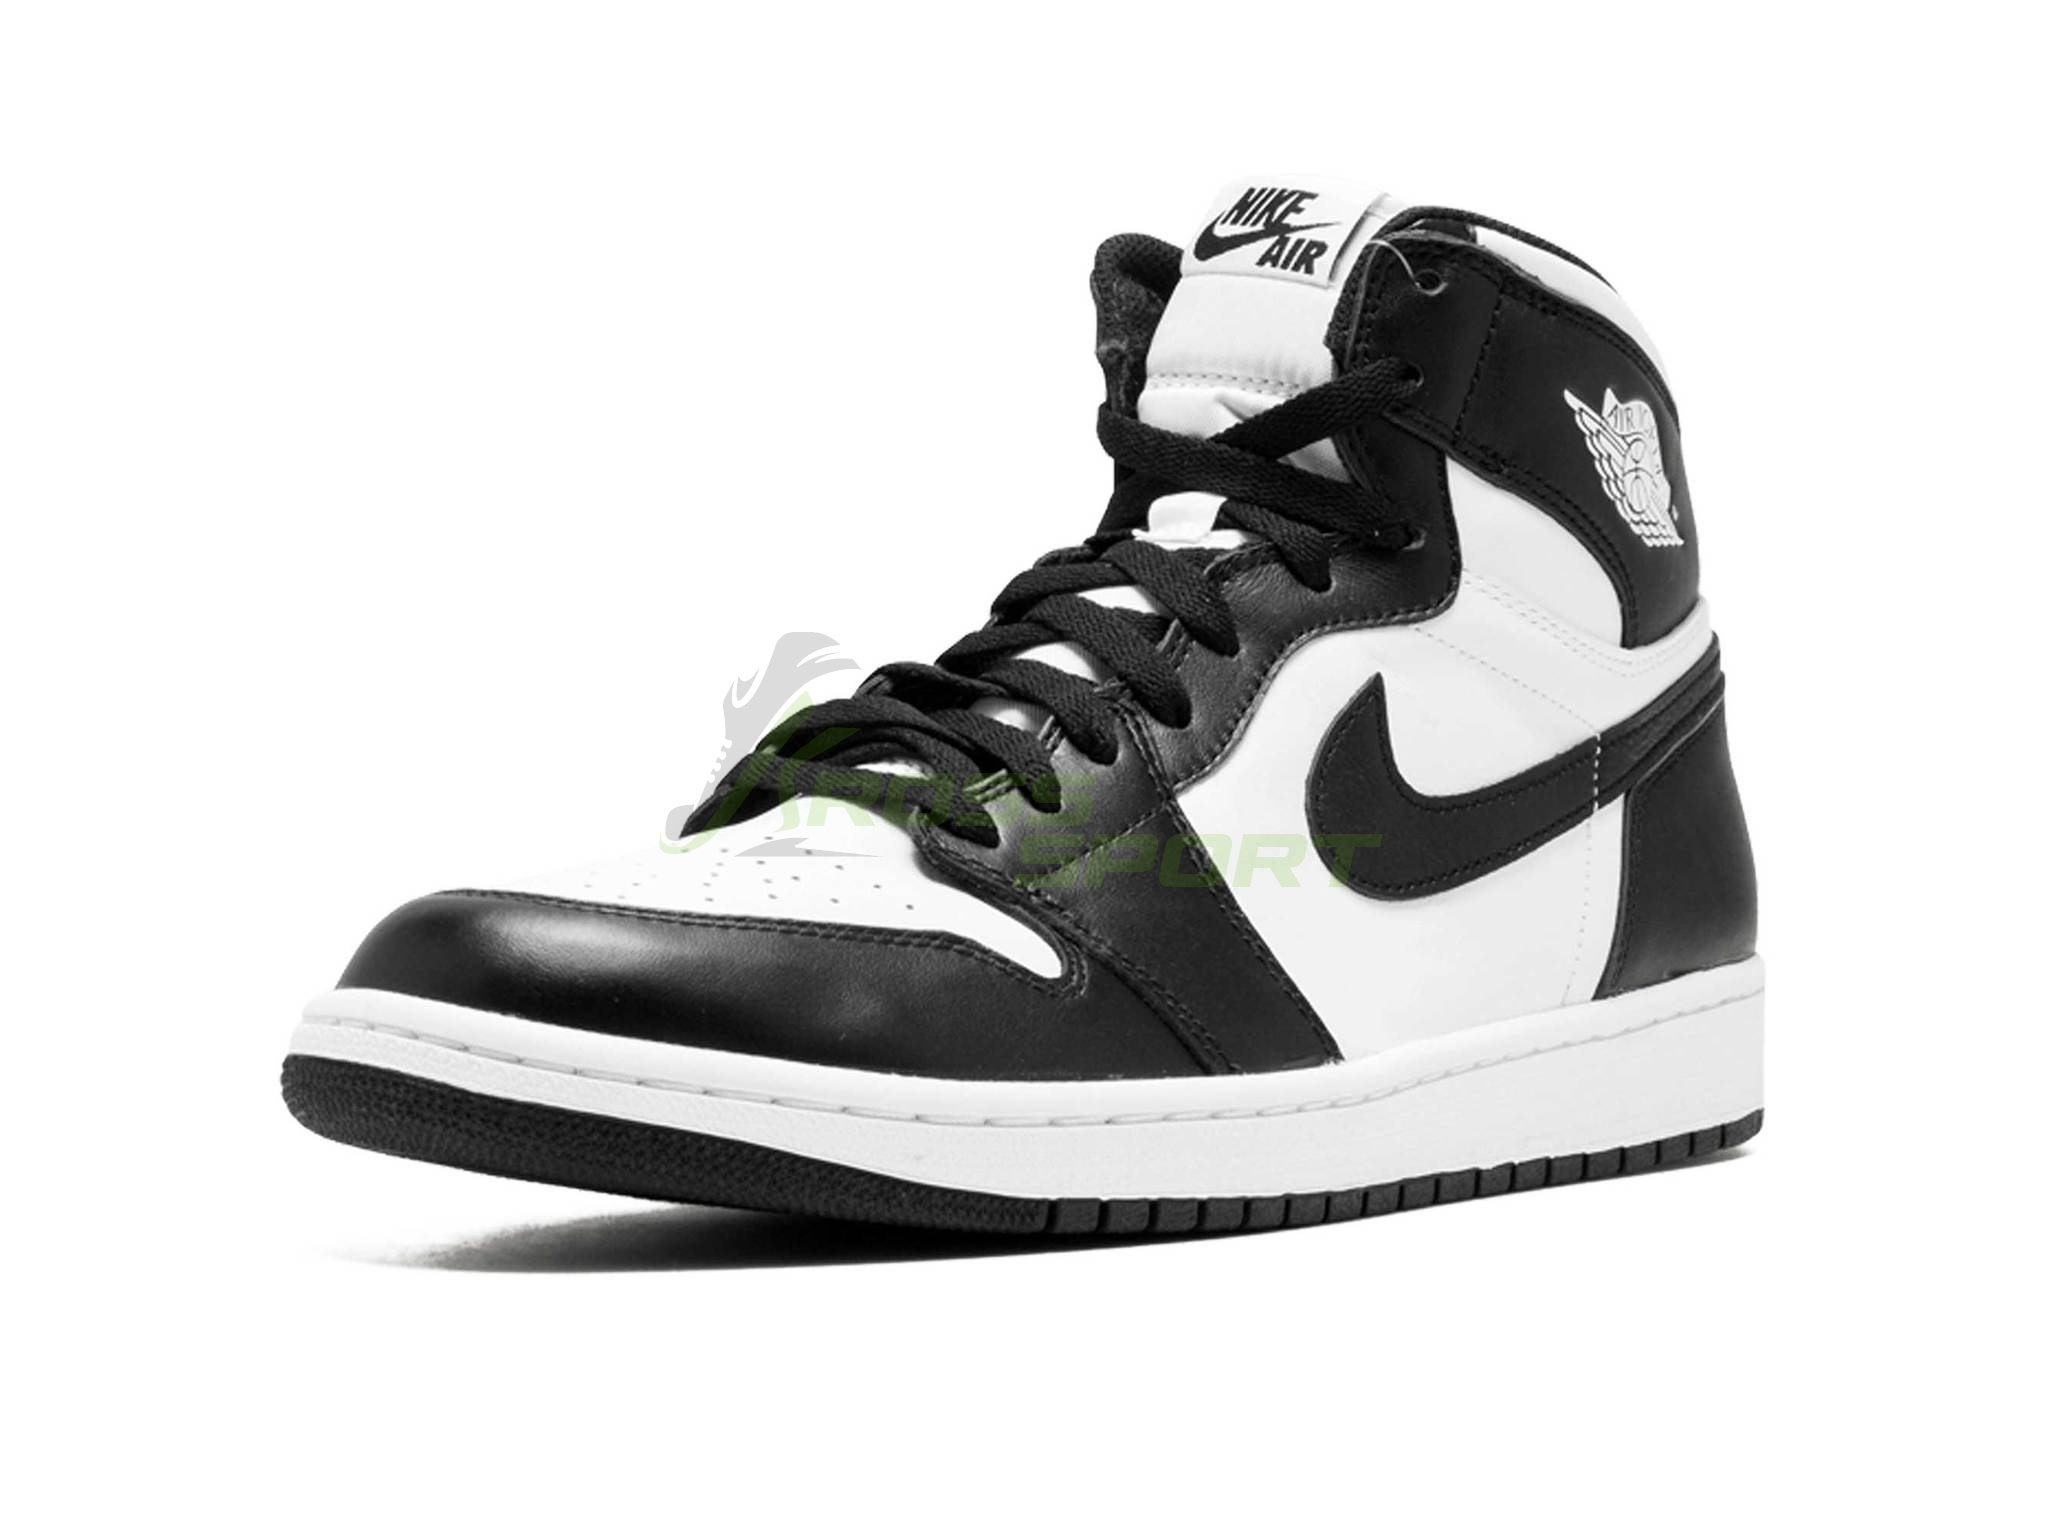  Nike Air Jordan 1 Retro Hi Og Black/White